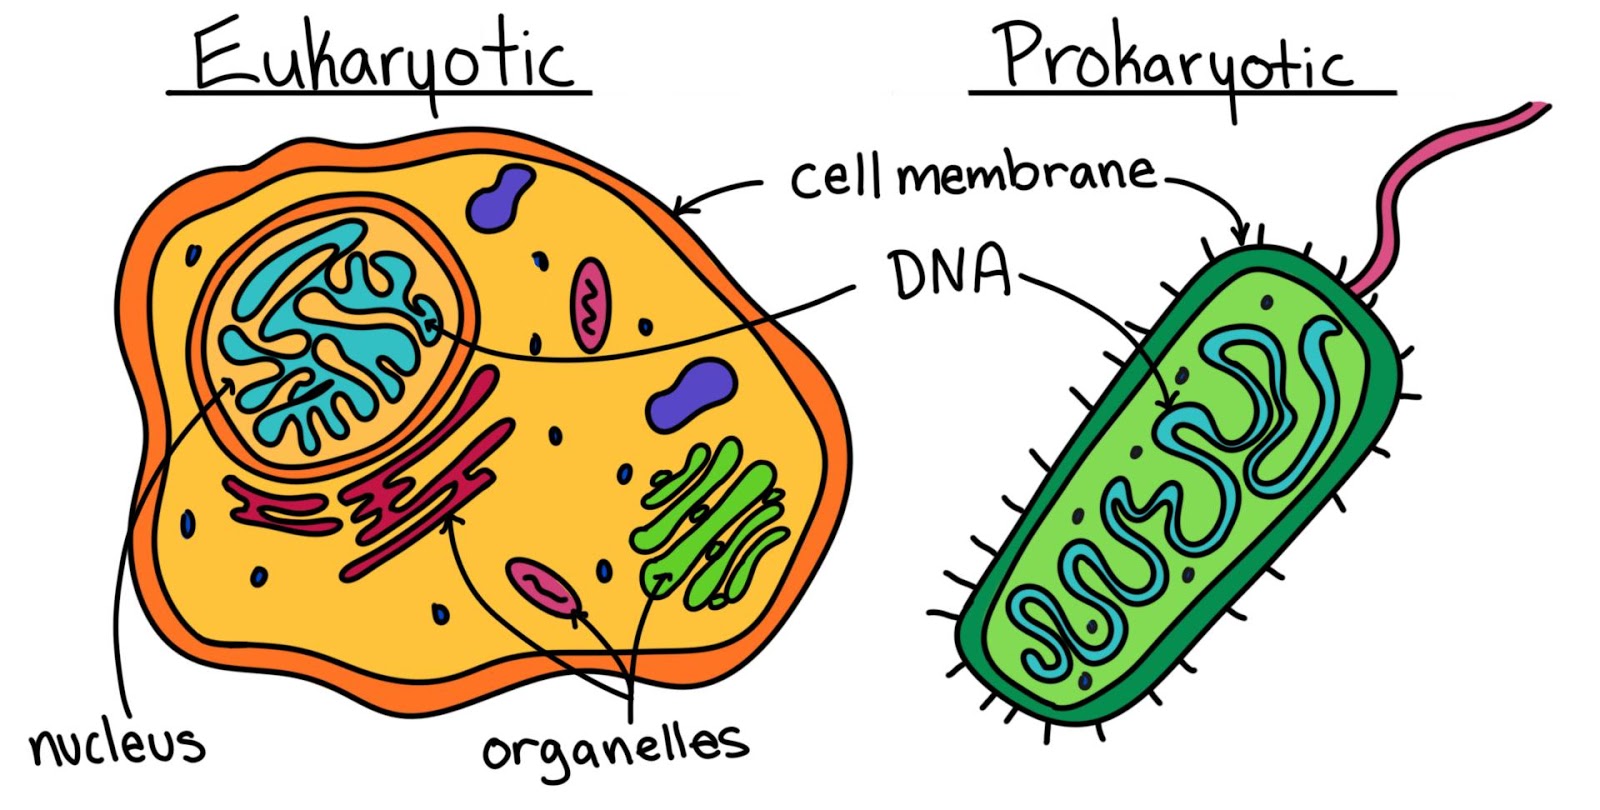 Eukaryotic Vs Prokaryotic Cells Chart